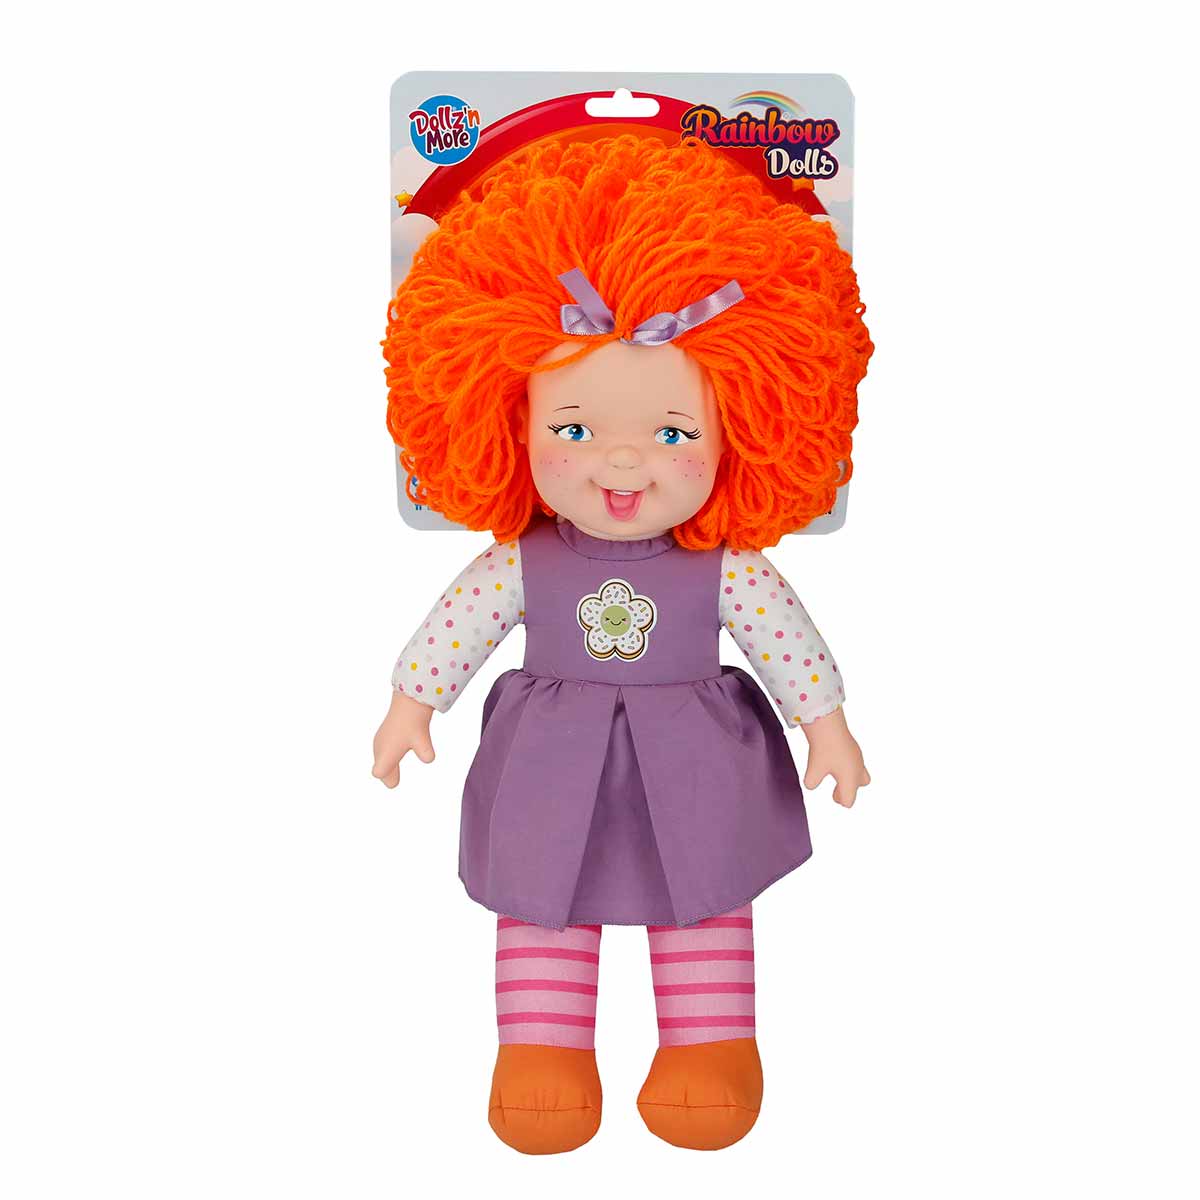 Papusa Rainbow Dolls, Dollz n More, cu par portocaliu, 45 cm Papusi 2023-09-26